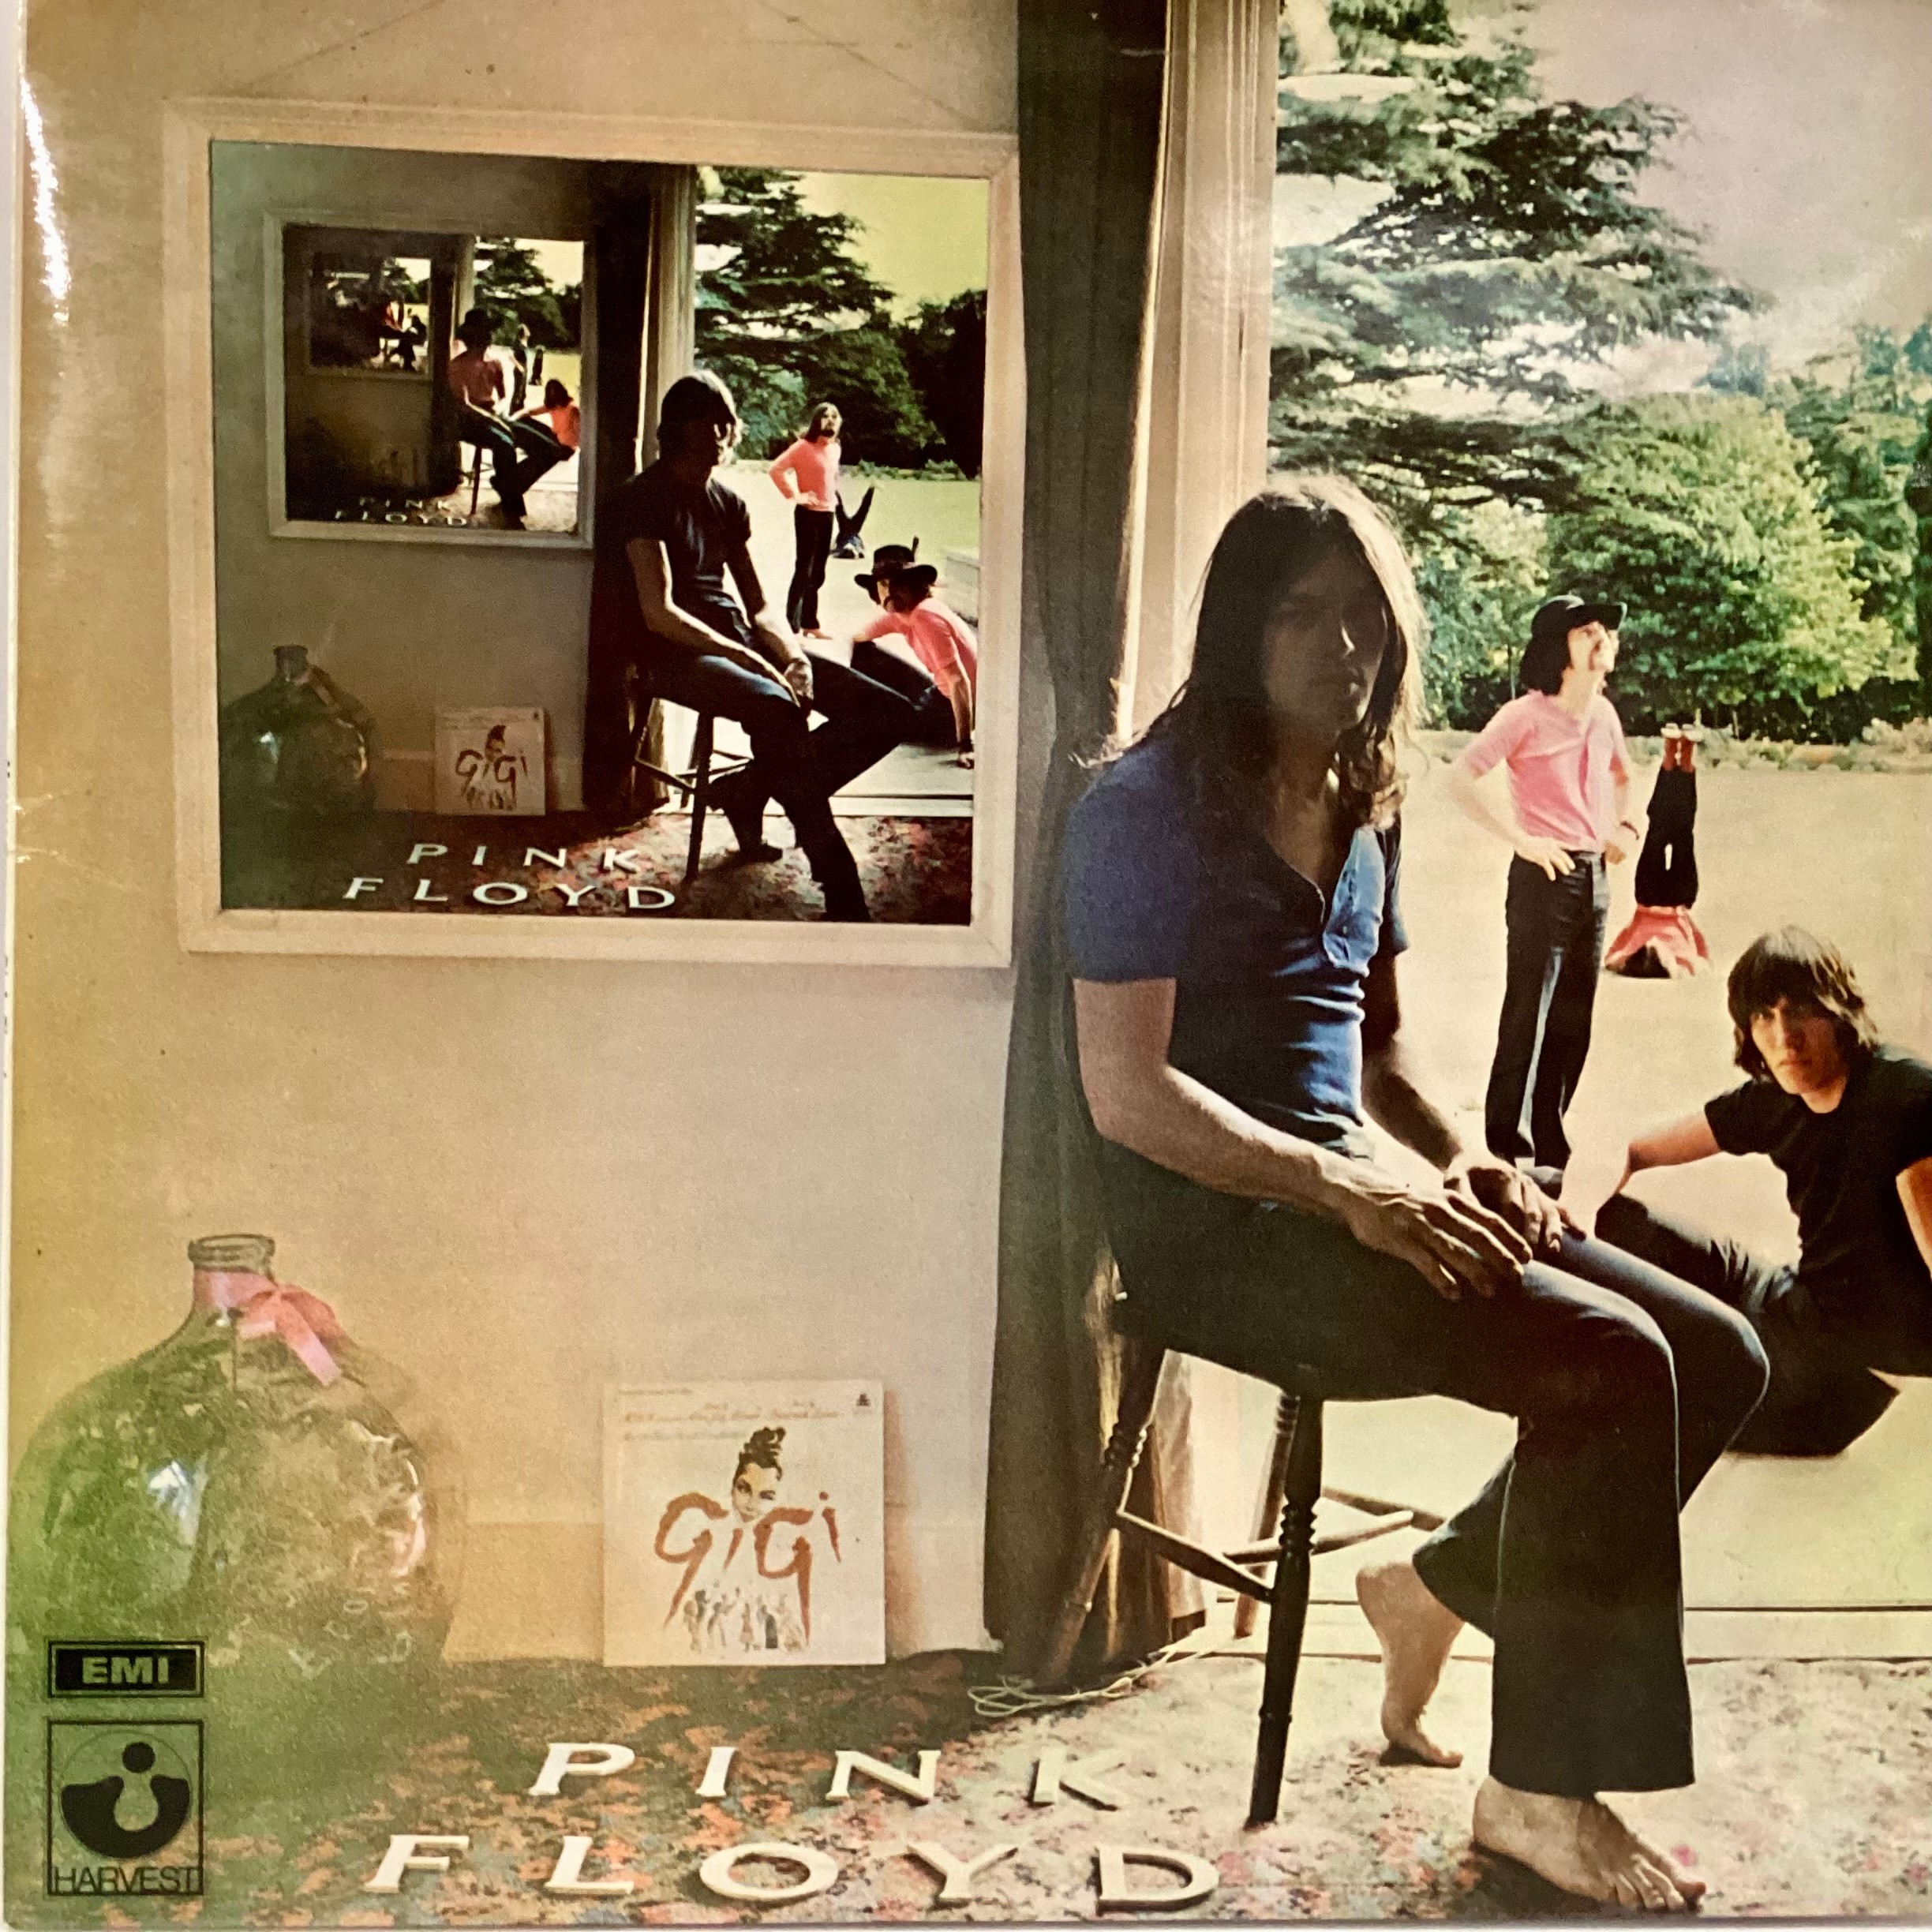 PINK FLOYD ‘UMMAGUMMA’ DOUBLE VINYL ALBUM. 1969 UK double vinyl LP with EMI logo on the labels. In a